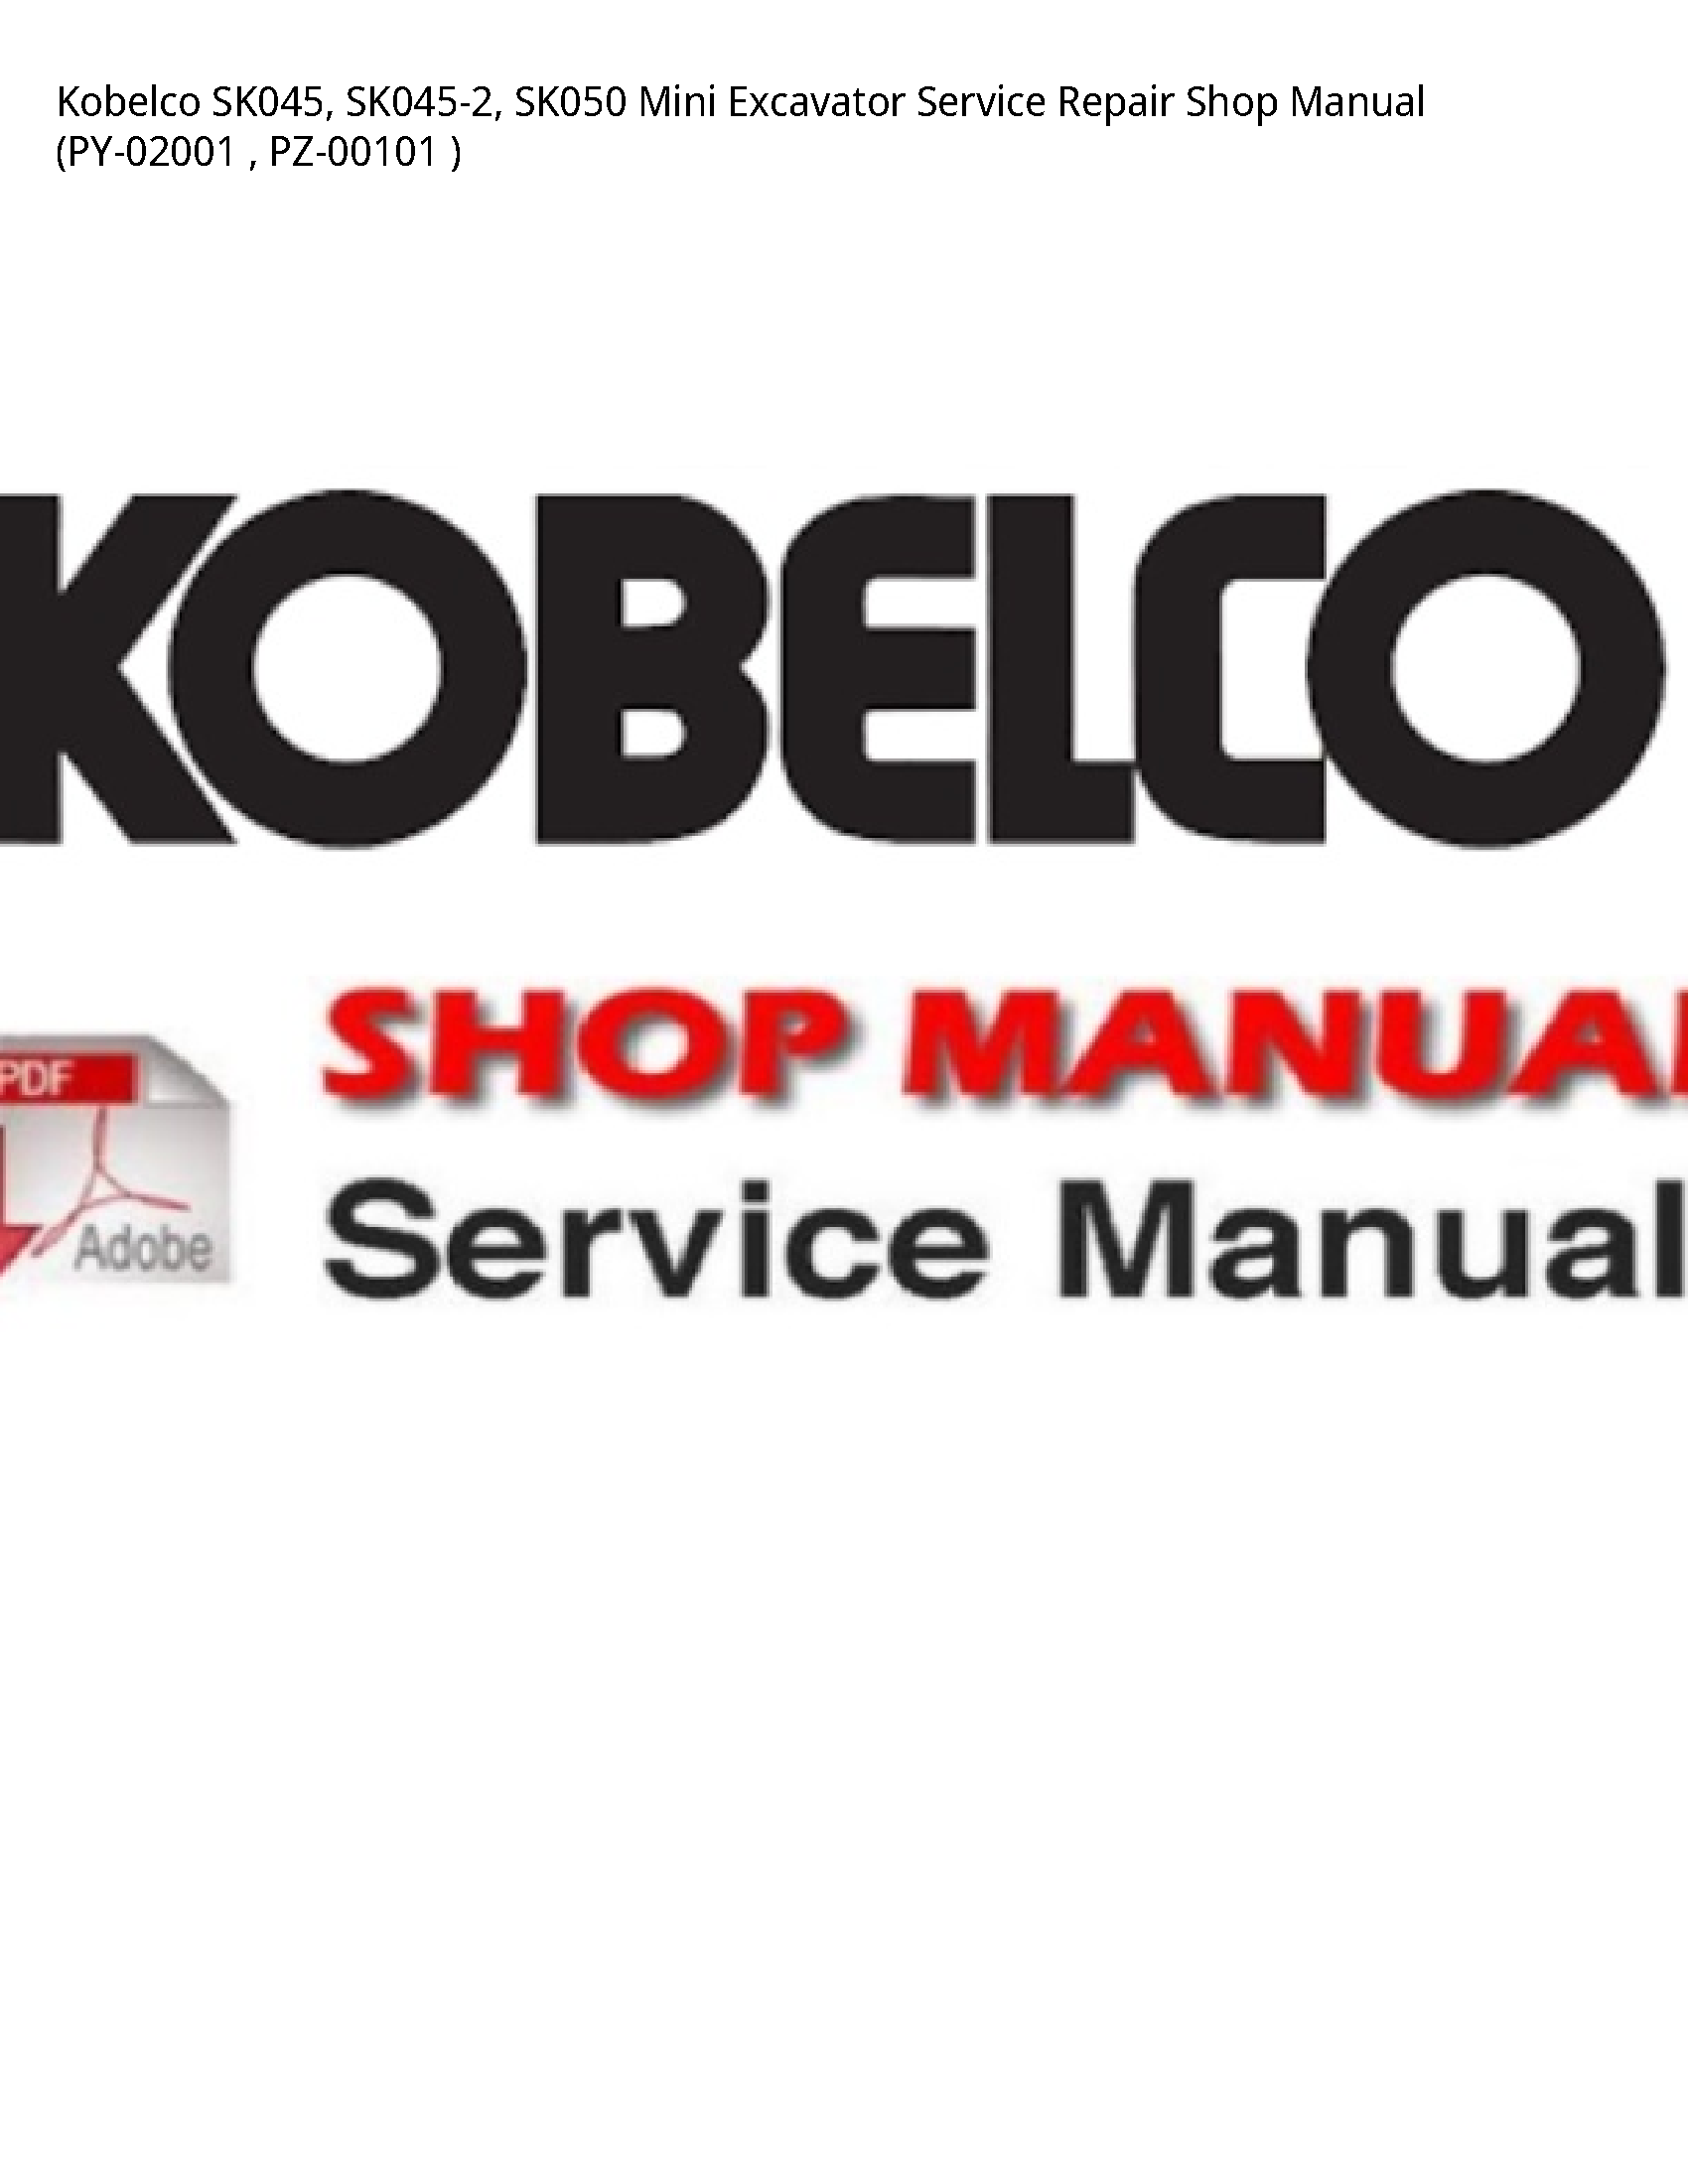 Kobelco SK045 Mini Excavator manual